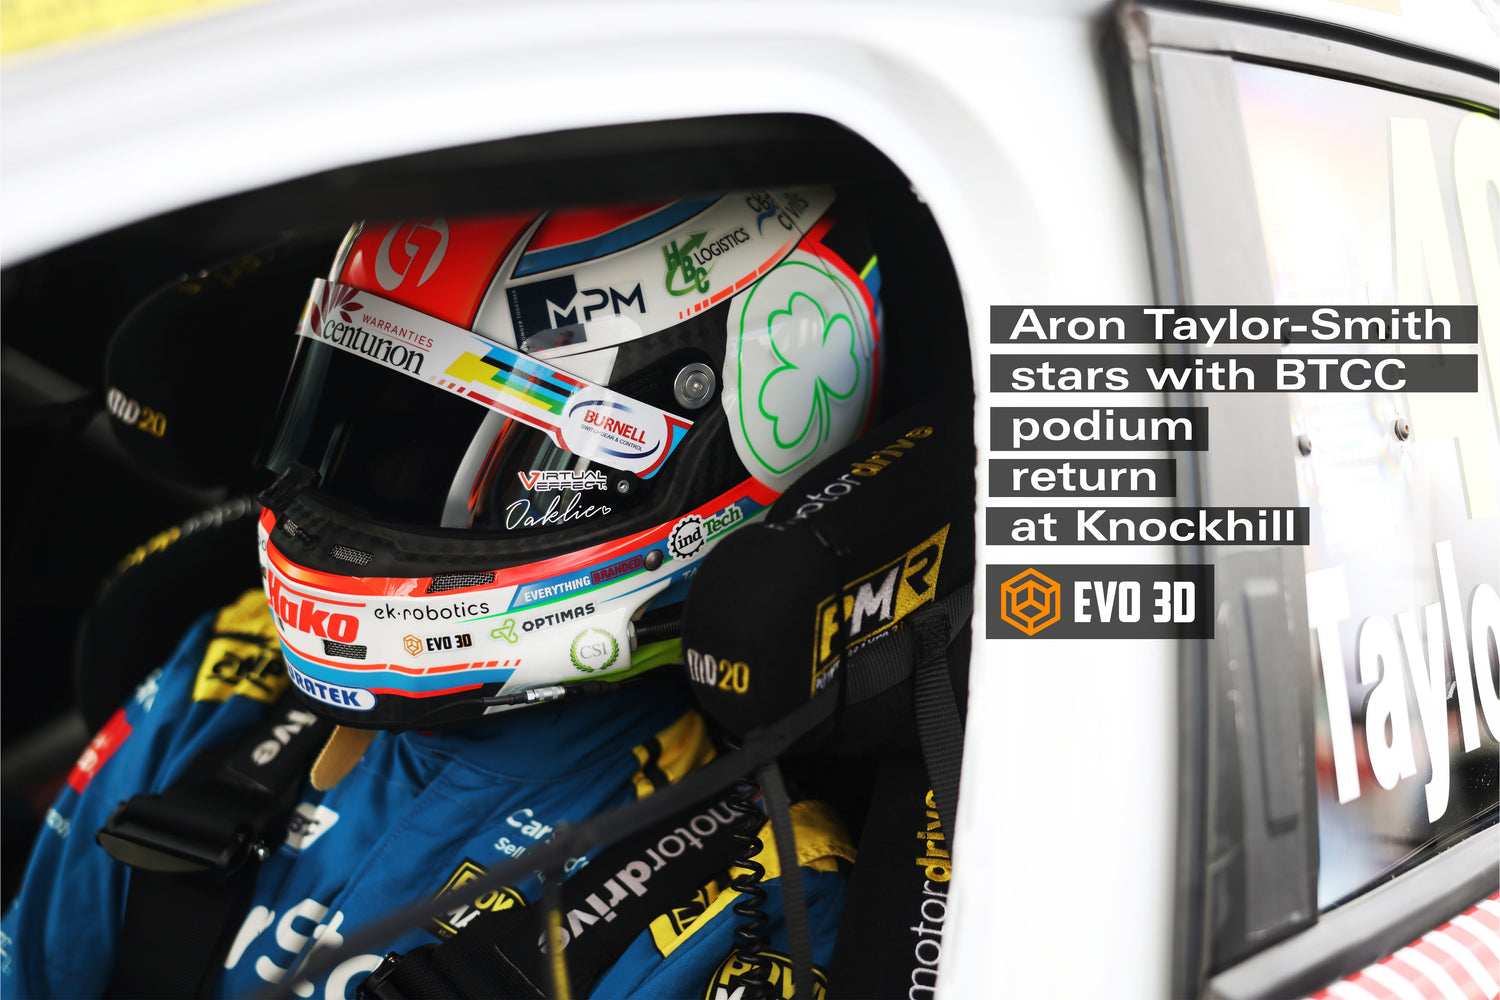 Evo 3D Partner Racer Aron Taylor-Smith stars with BTCC podium return at Knockhill